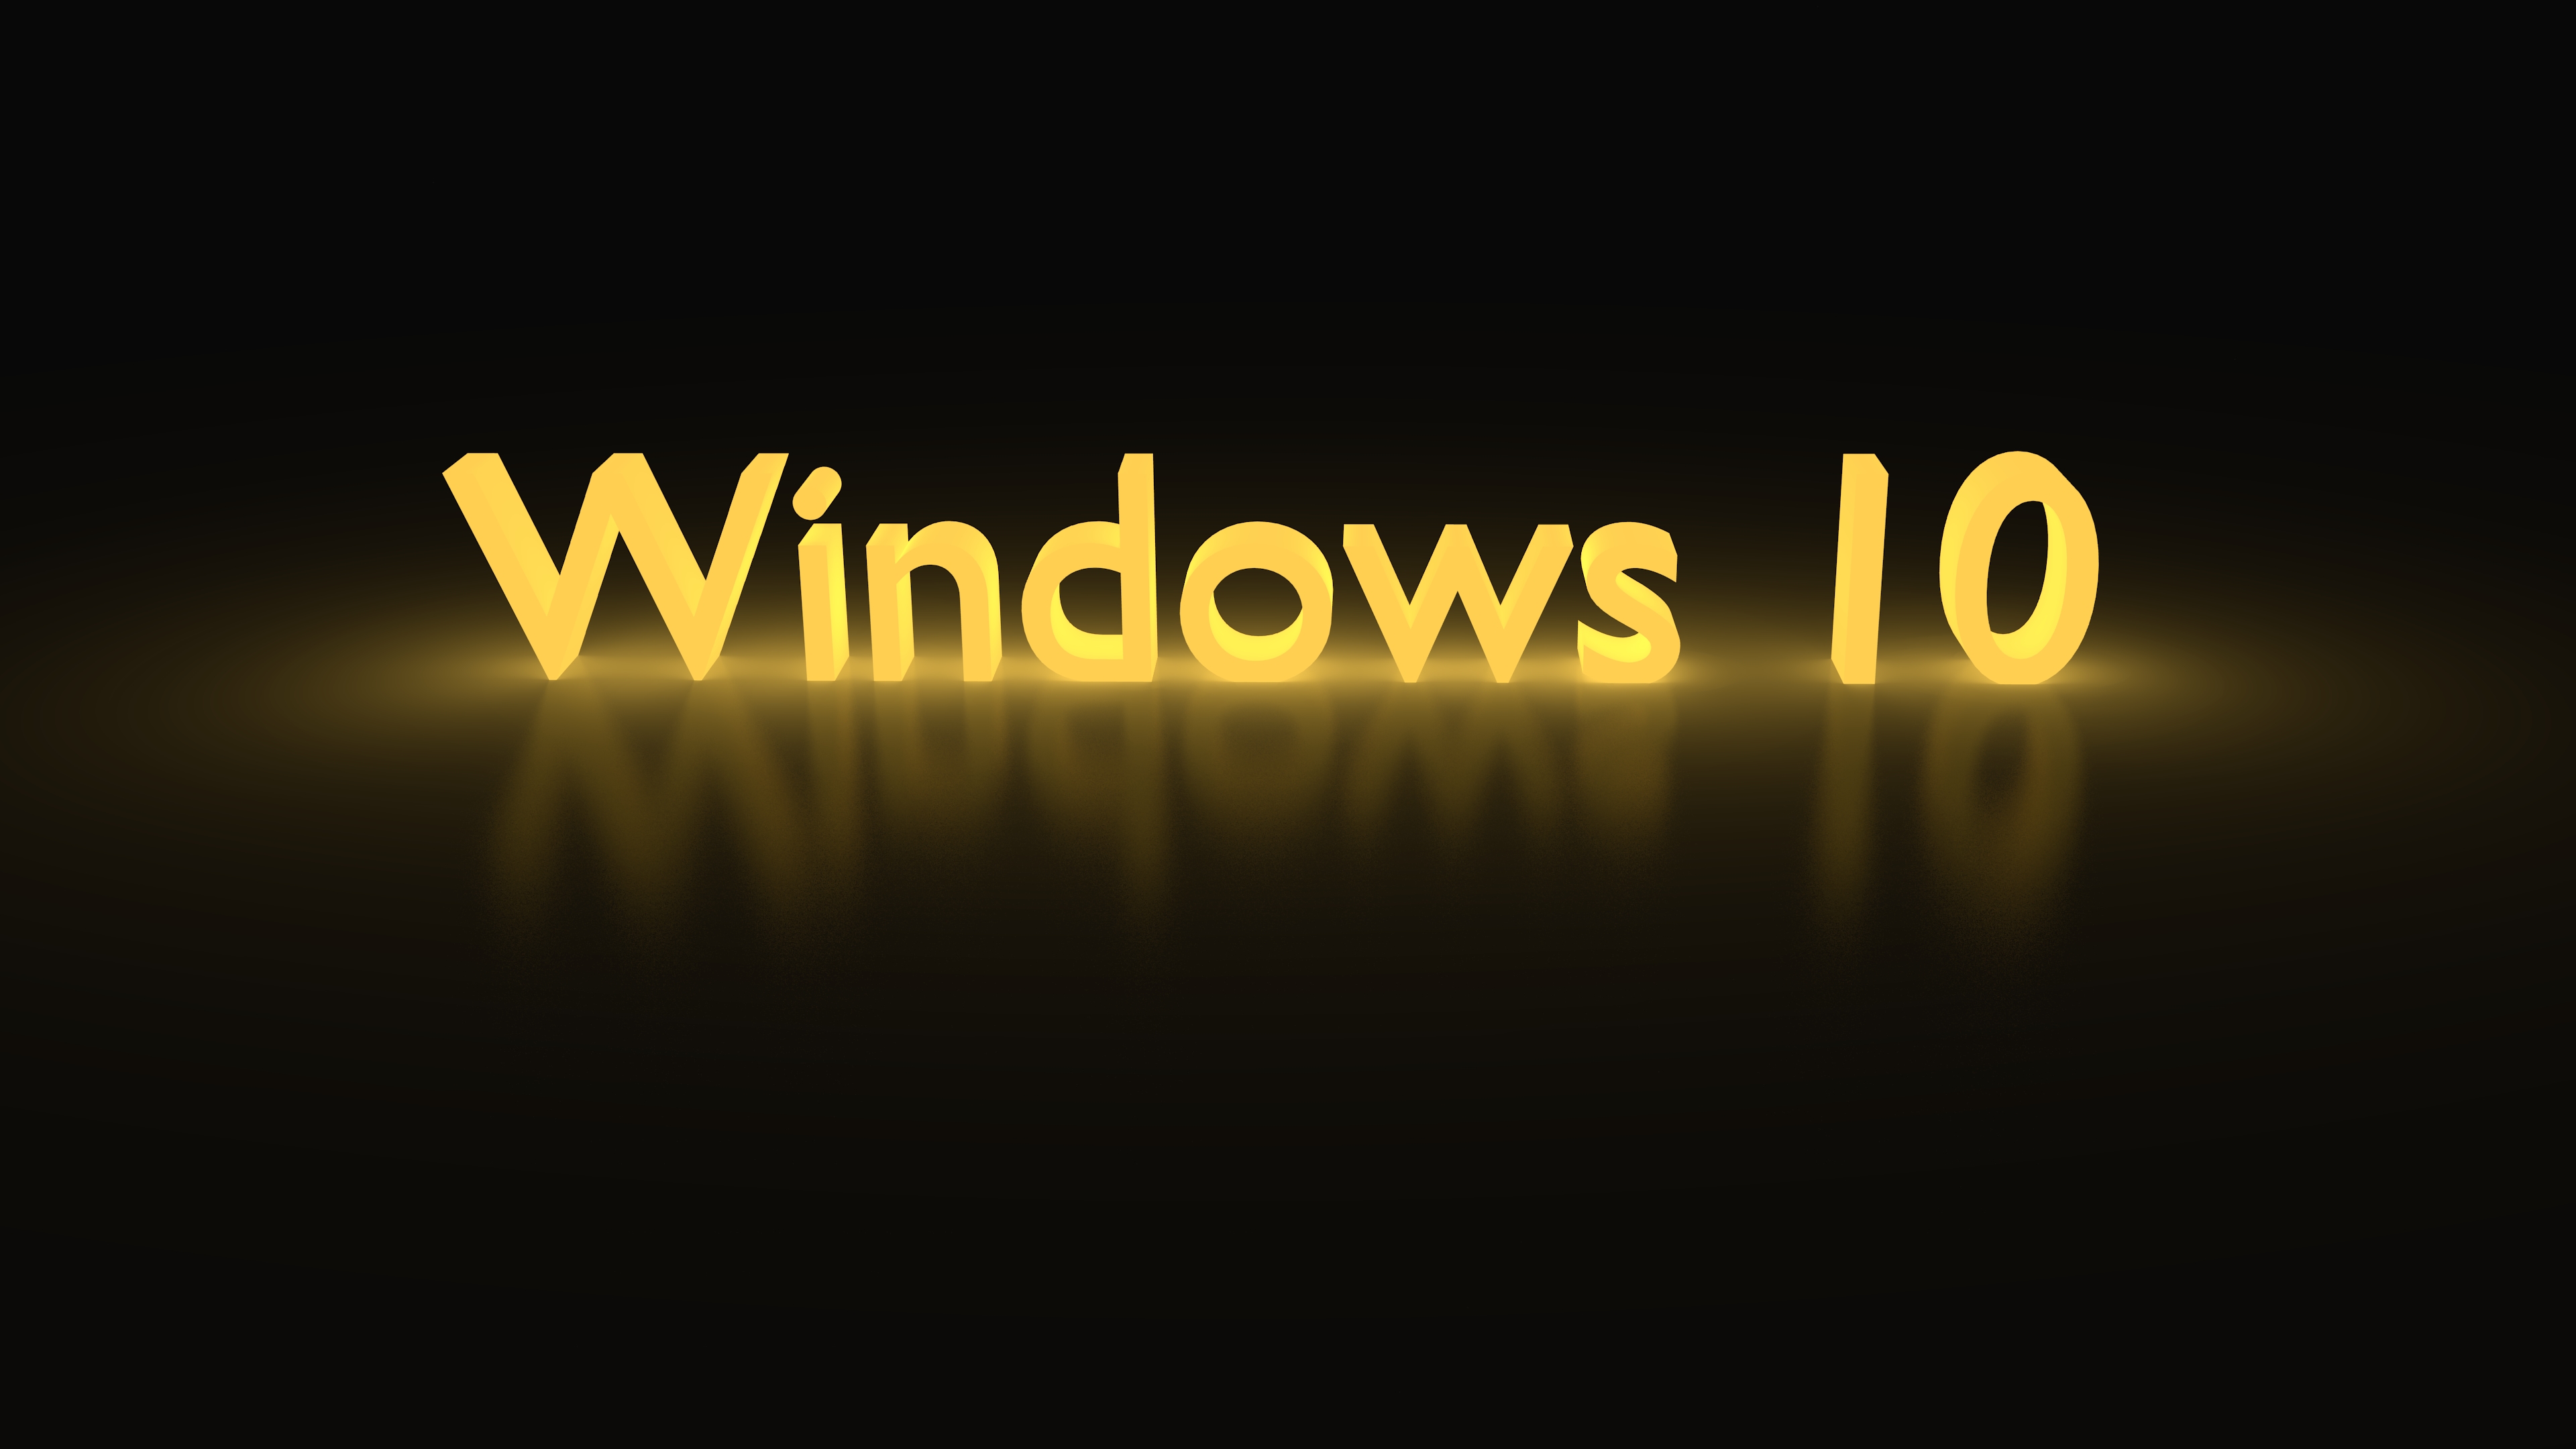 windows 10, technology, windows Free Stock Photo